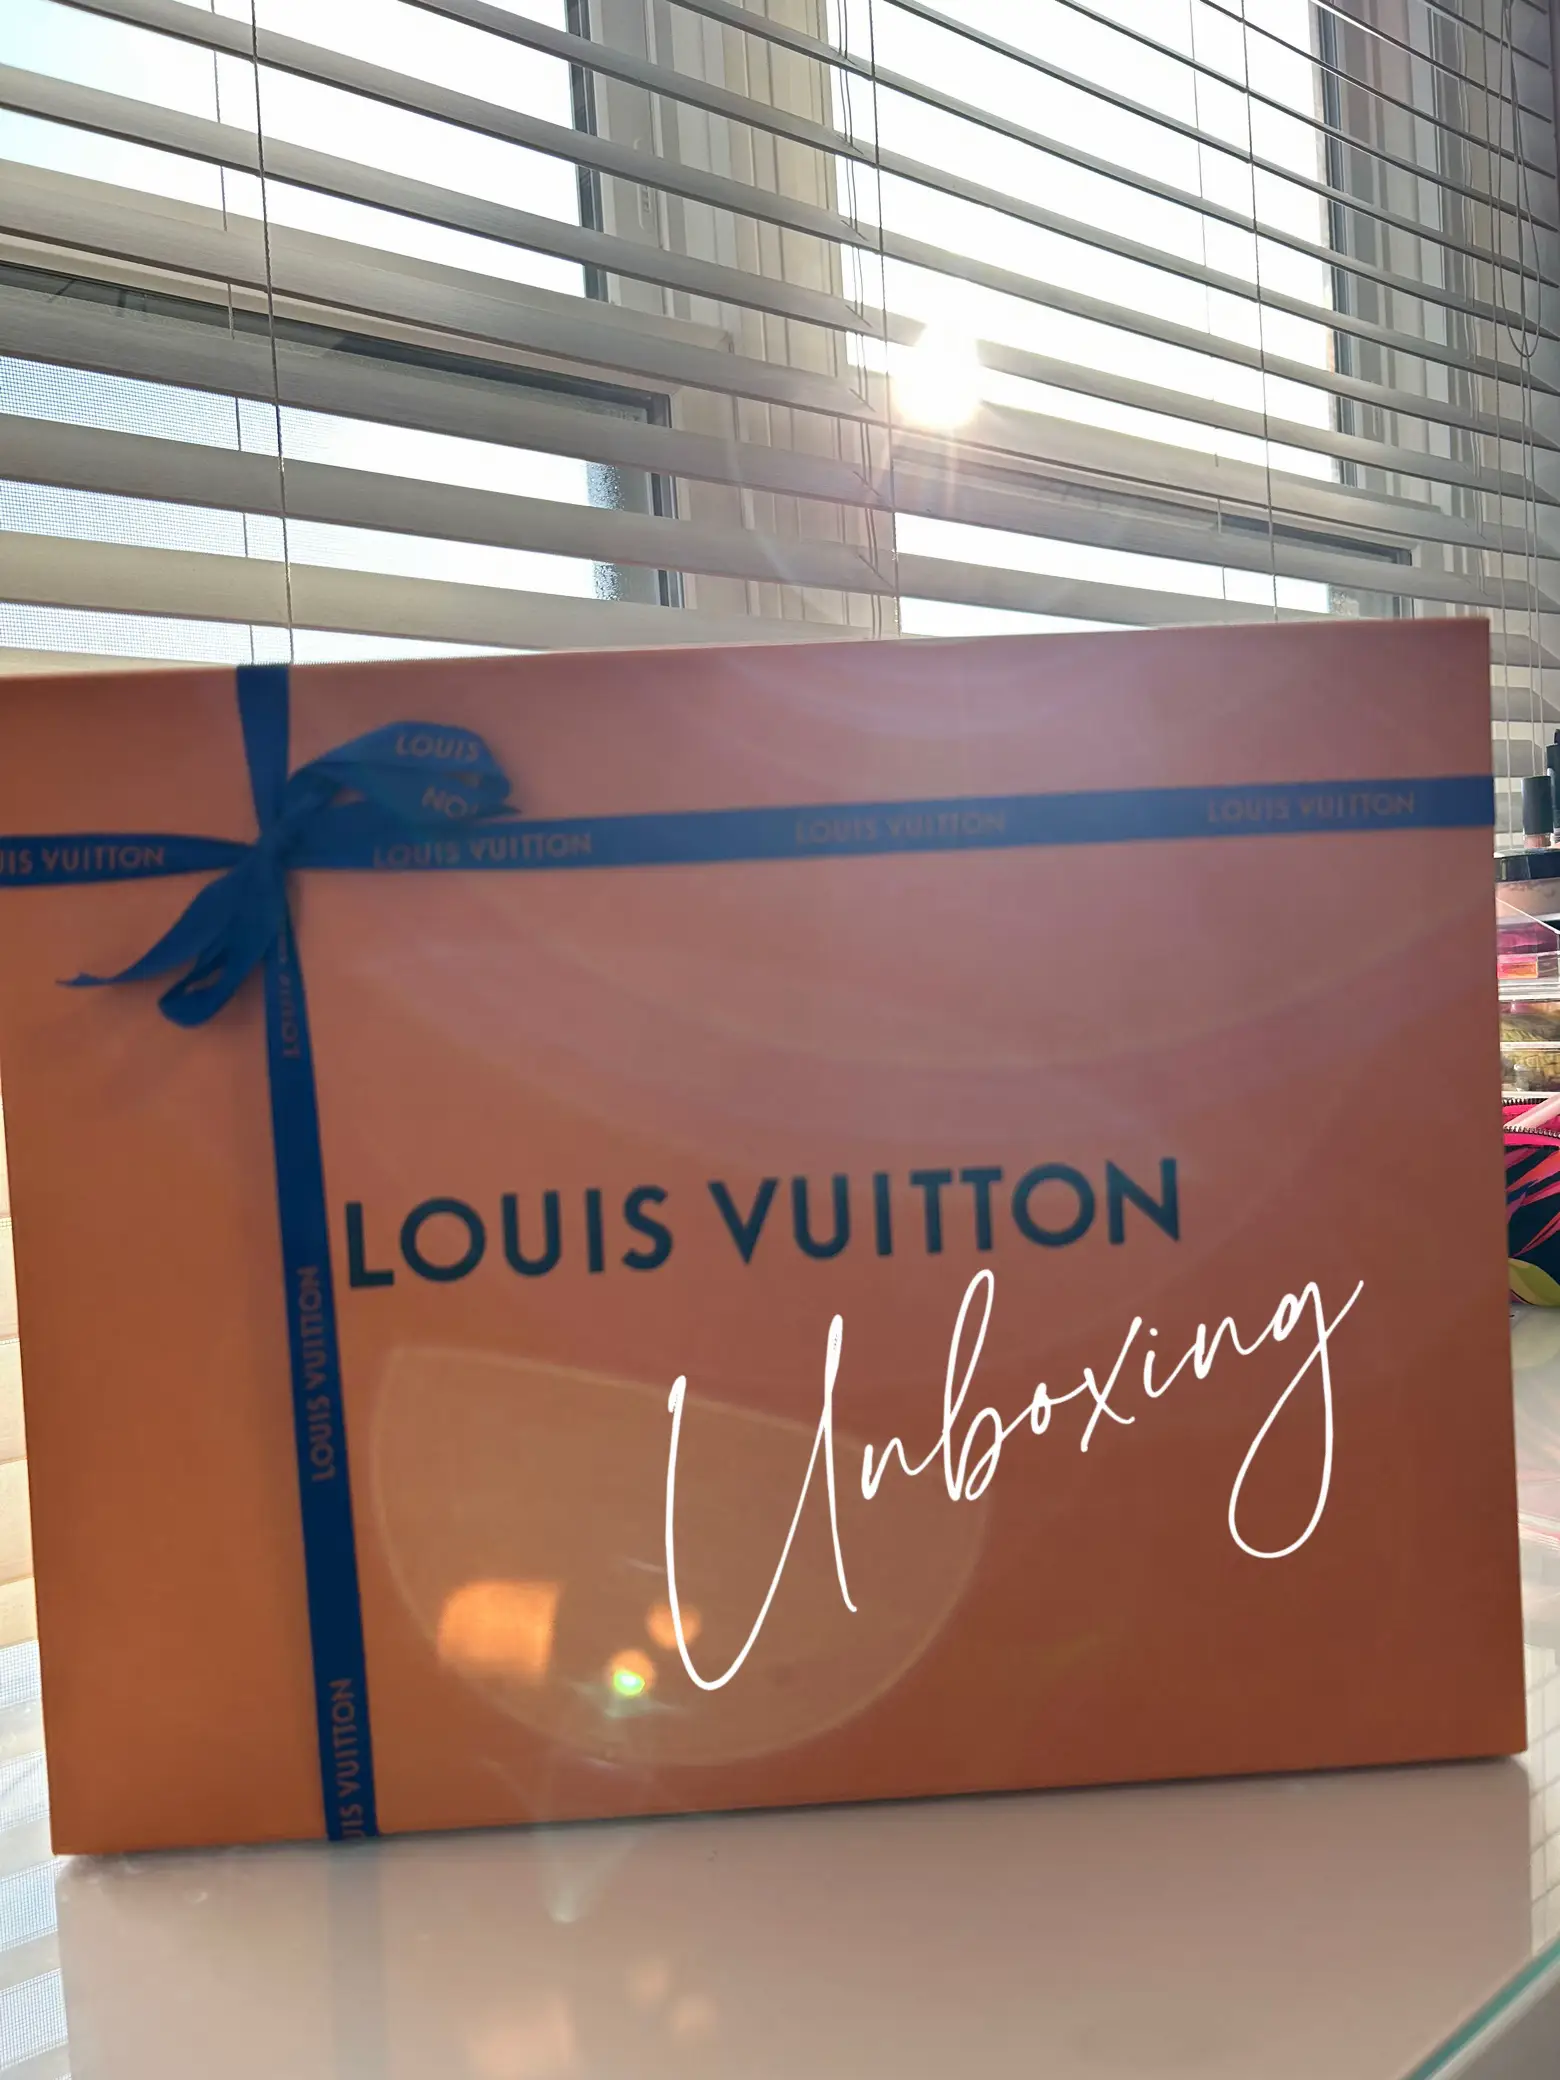 Louis Vuitton Women's at the Mall at Millenia - Orlando, FL